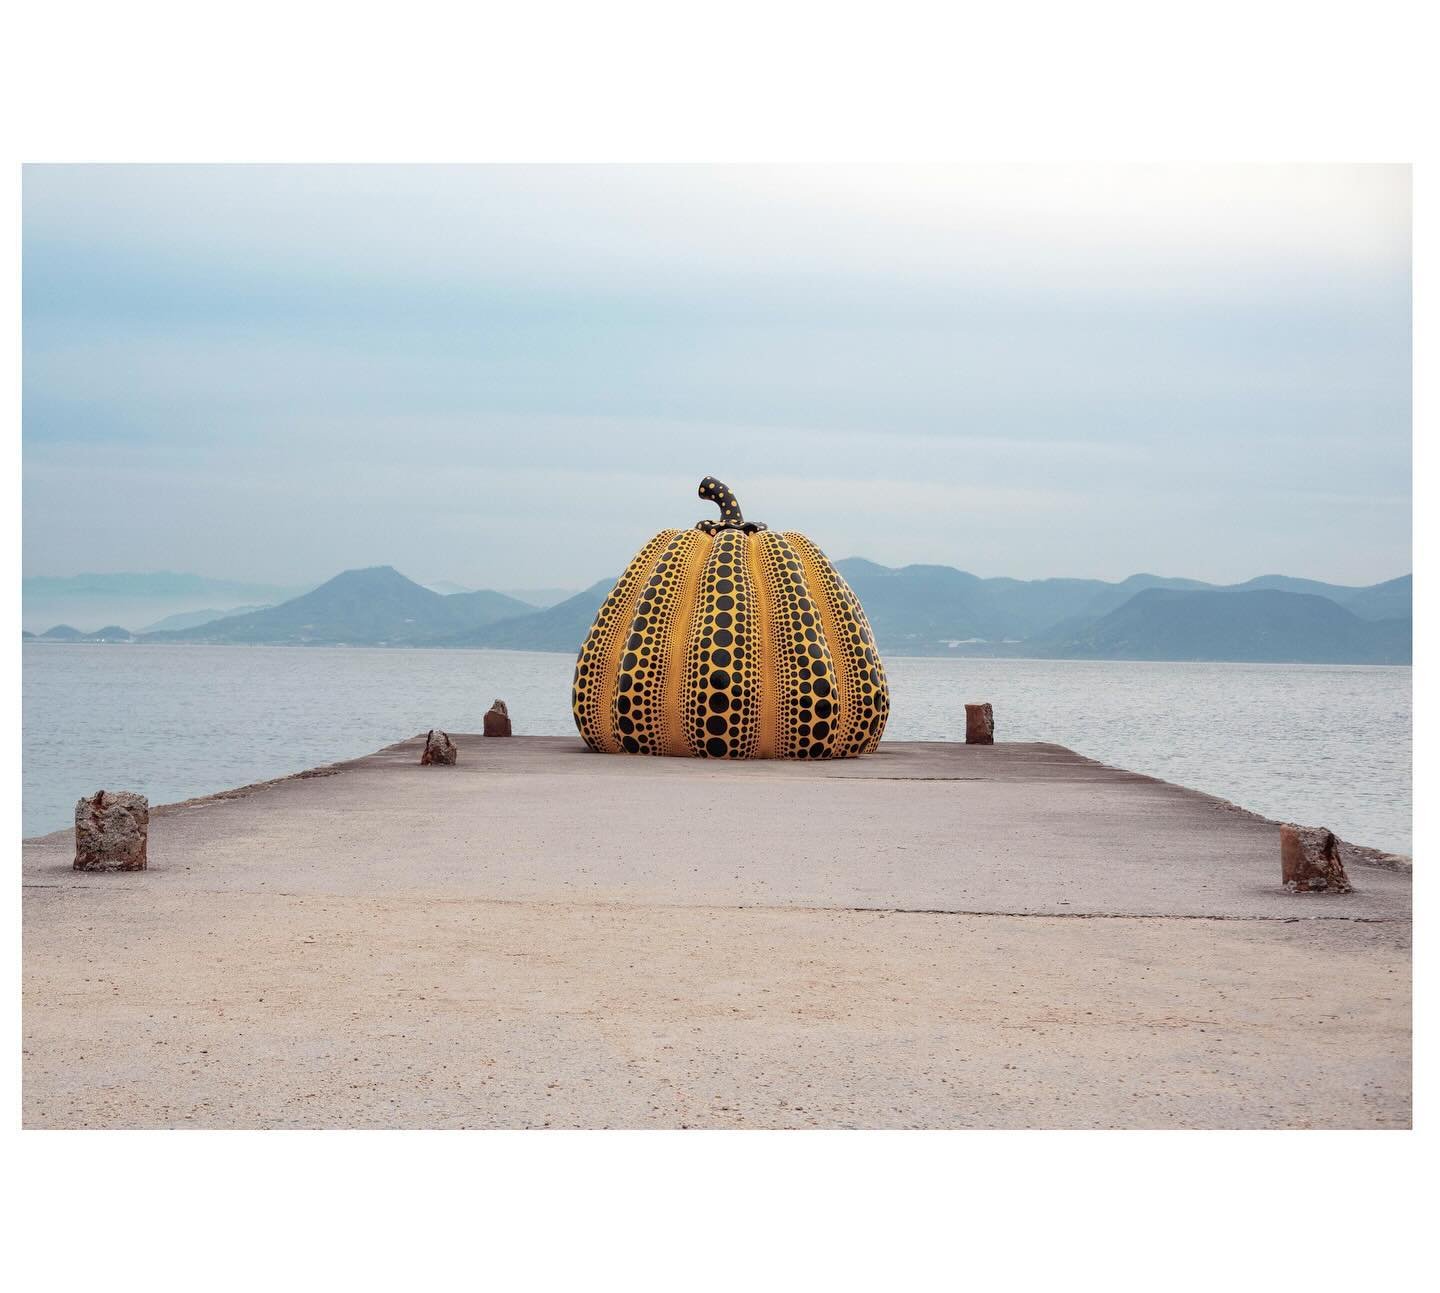 Naoshima Island (aka Art Island) in Japan was an eye opening destination for an art lover. Installation by @yayoikusama_ #naoshima #artisland #artinstallation #modernart